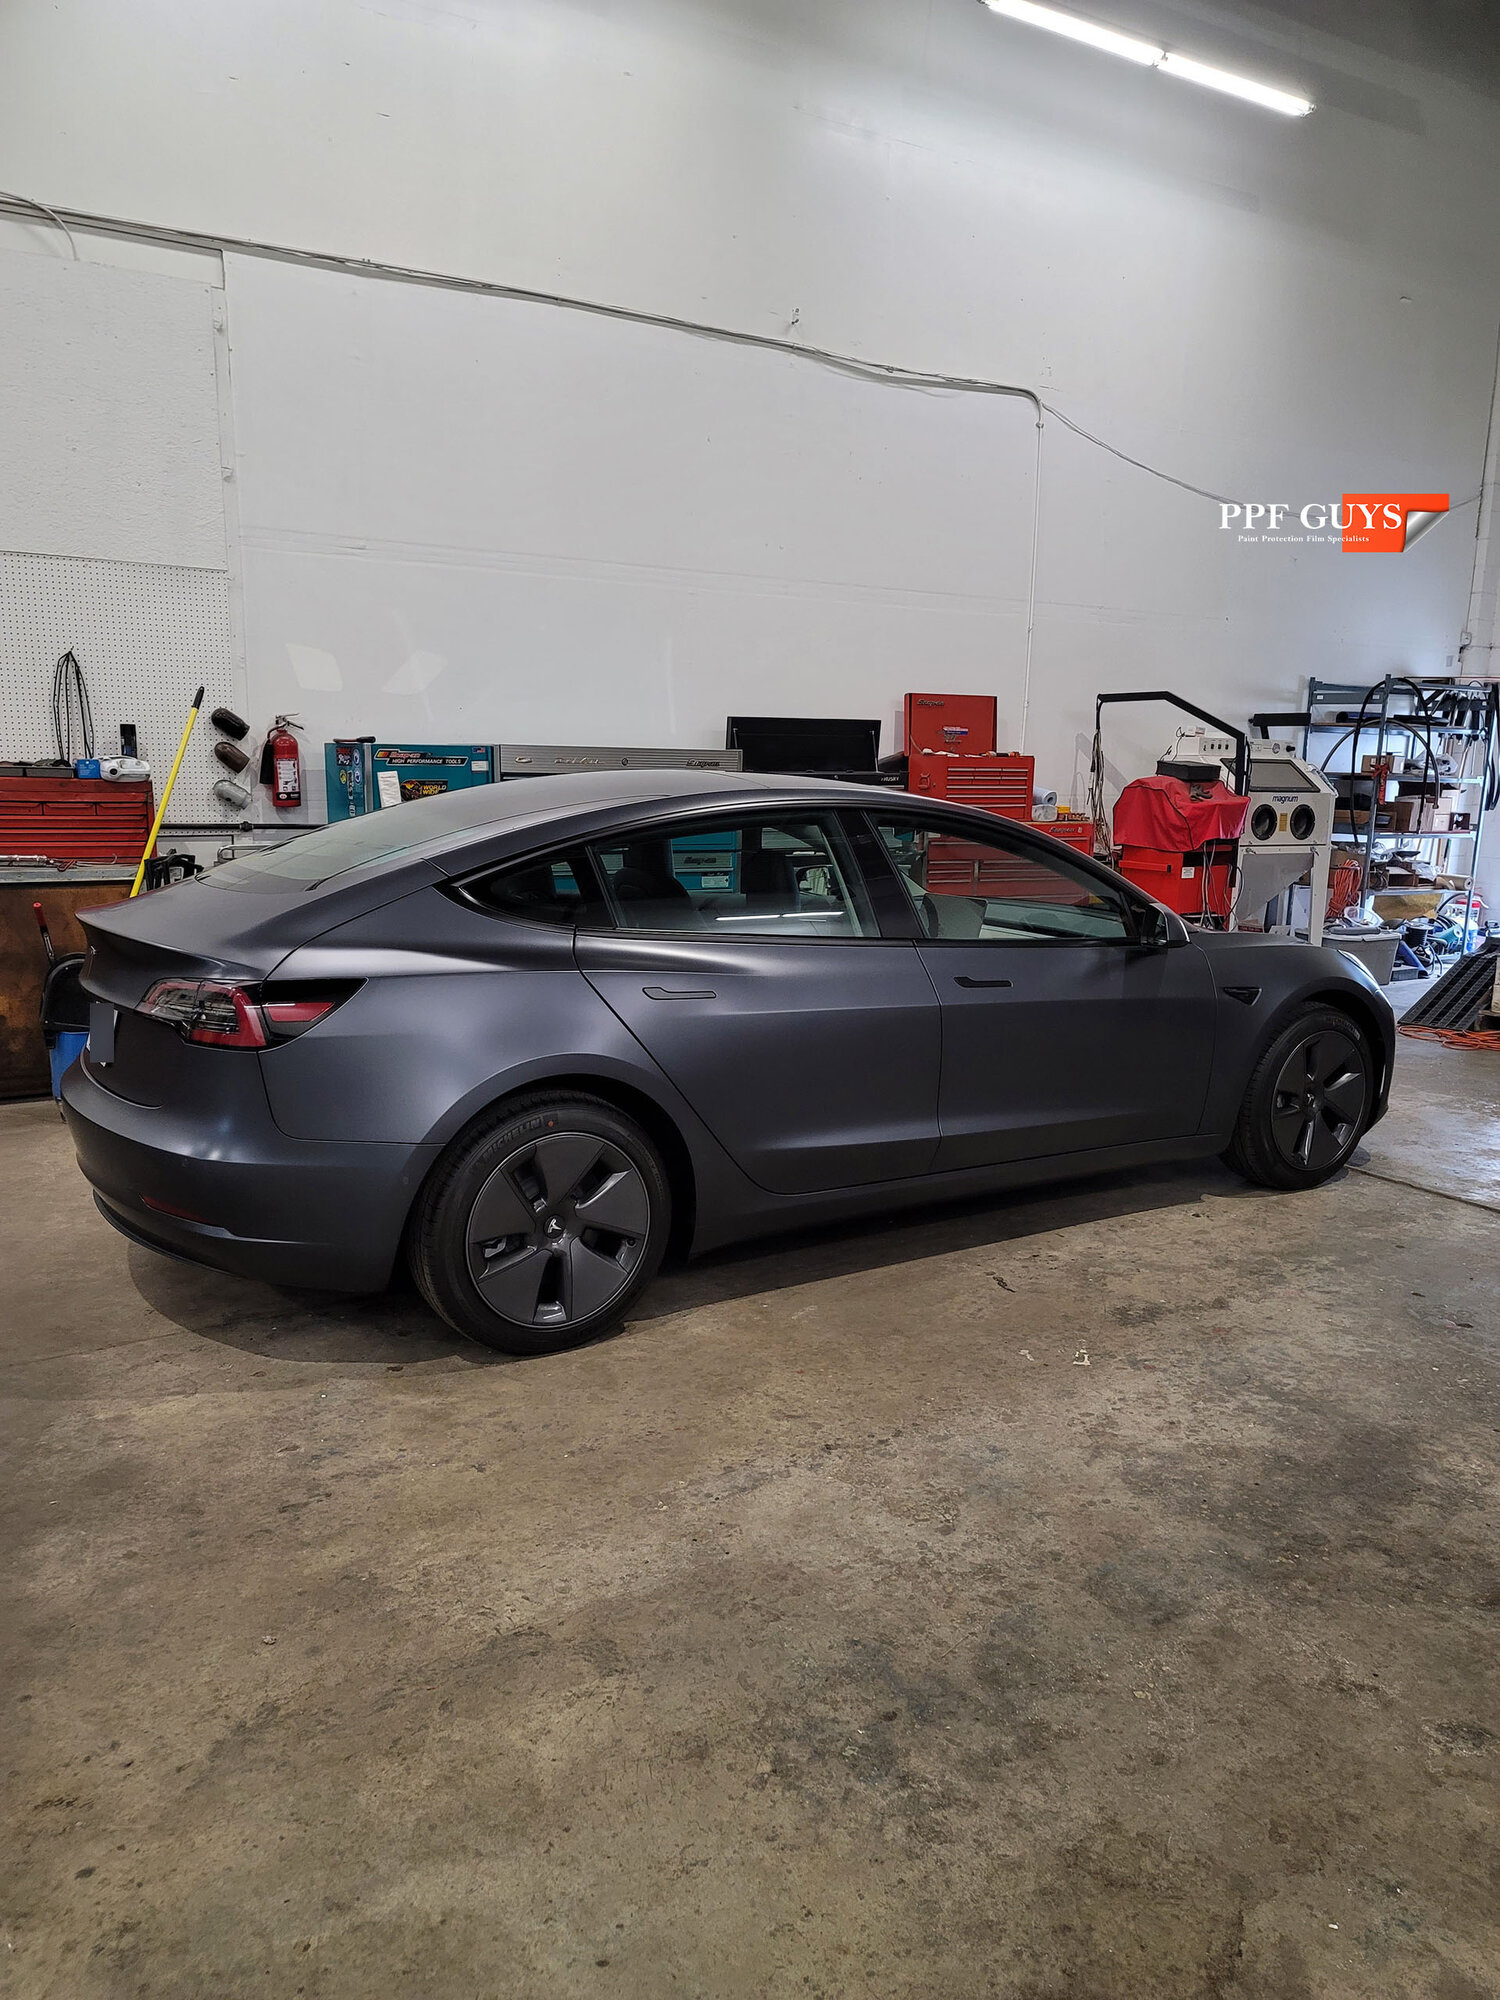 PPF Guys Tesla Model 3 Xpel Stealth (55).jpg